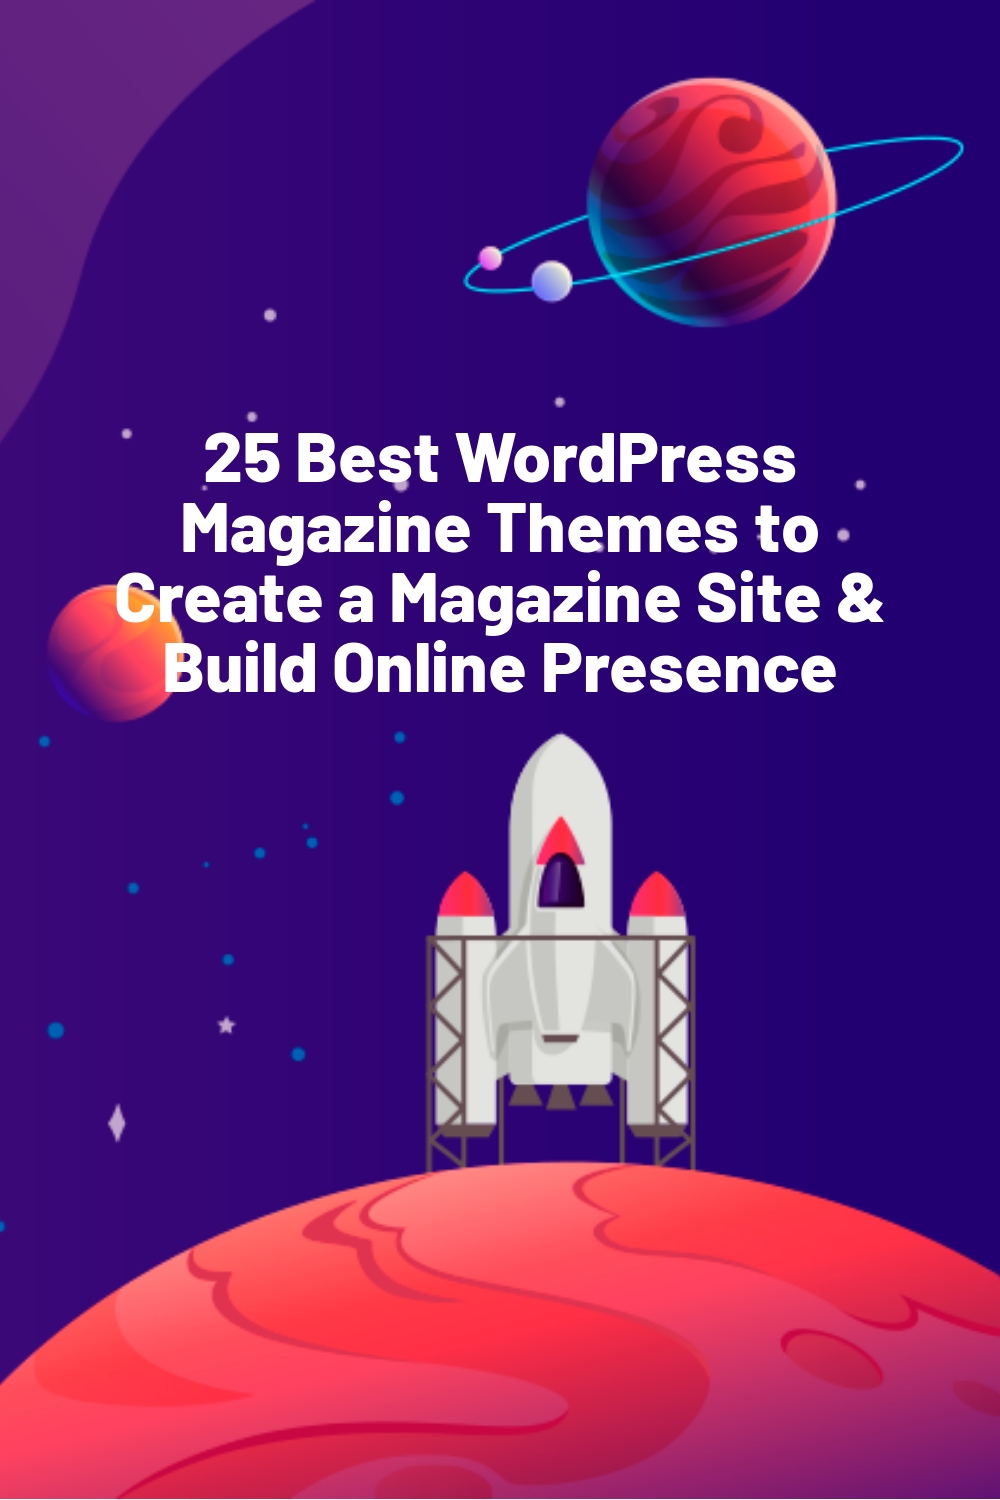 25 Best WordPress Magazine Themes to Create a Magazine Site & Build Online Presence